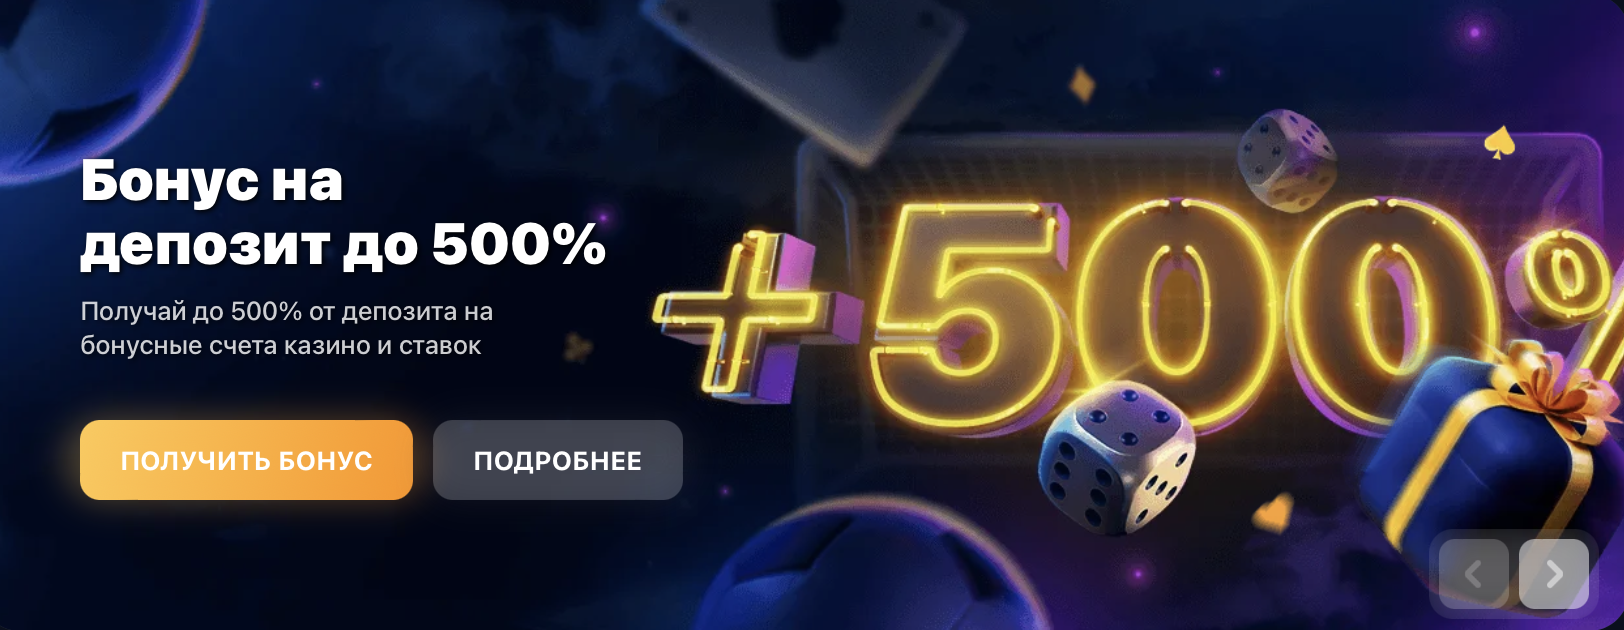 1win 1win site freebet net ru. Бонусы казино 1win. 1win бонус 500. Бонус. 500 Казино.